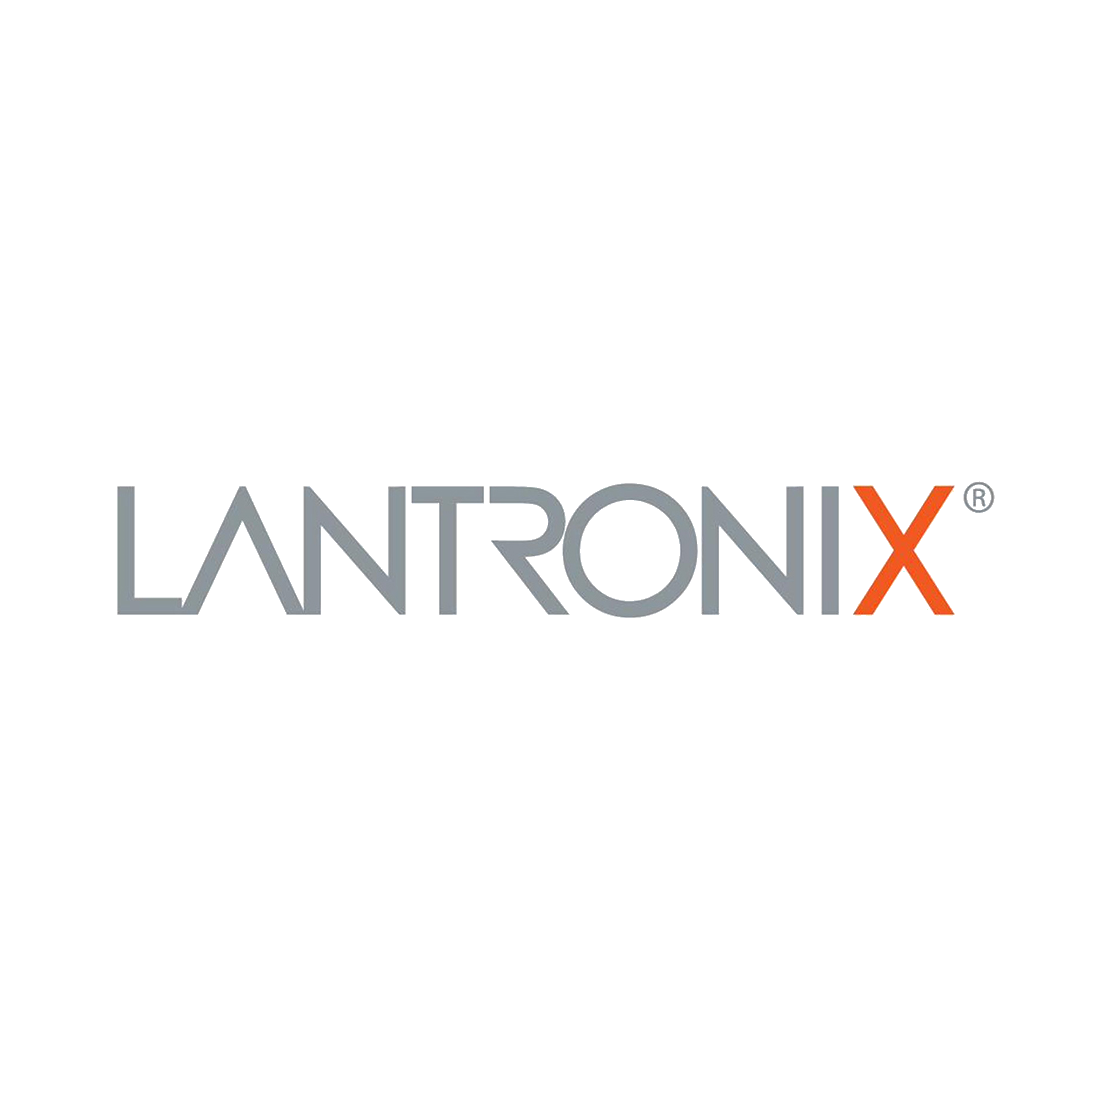 Lantronix Encryption Library Suite